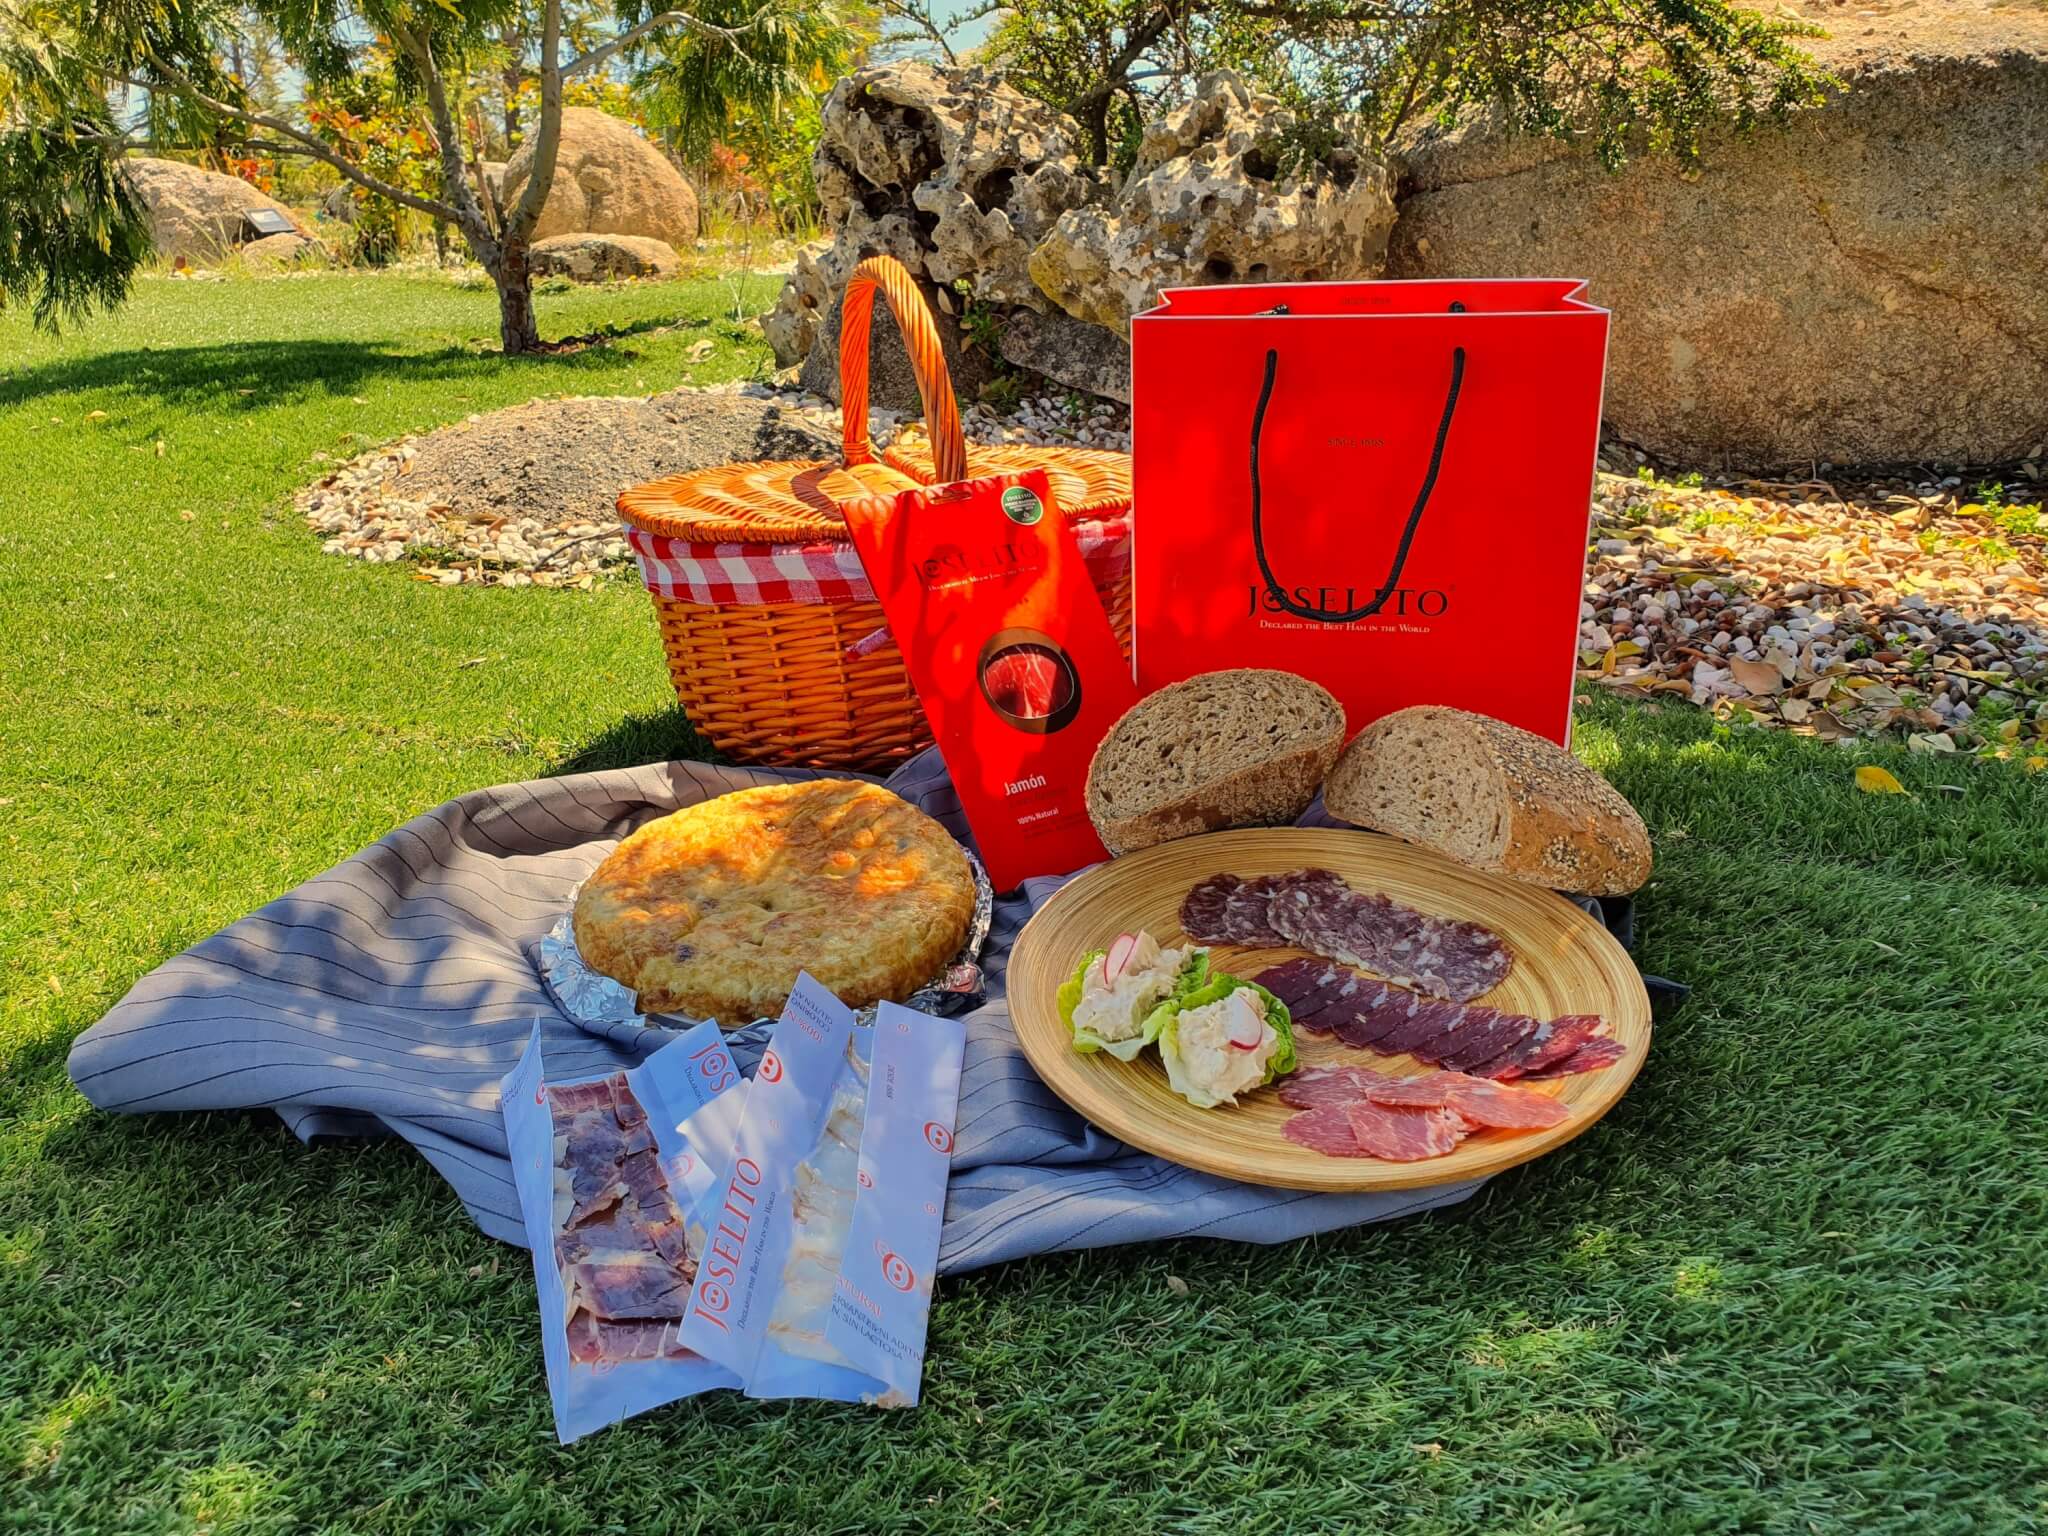 Qué llevar al picnic ideal